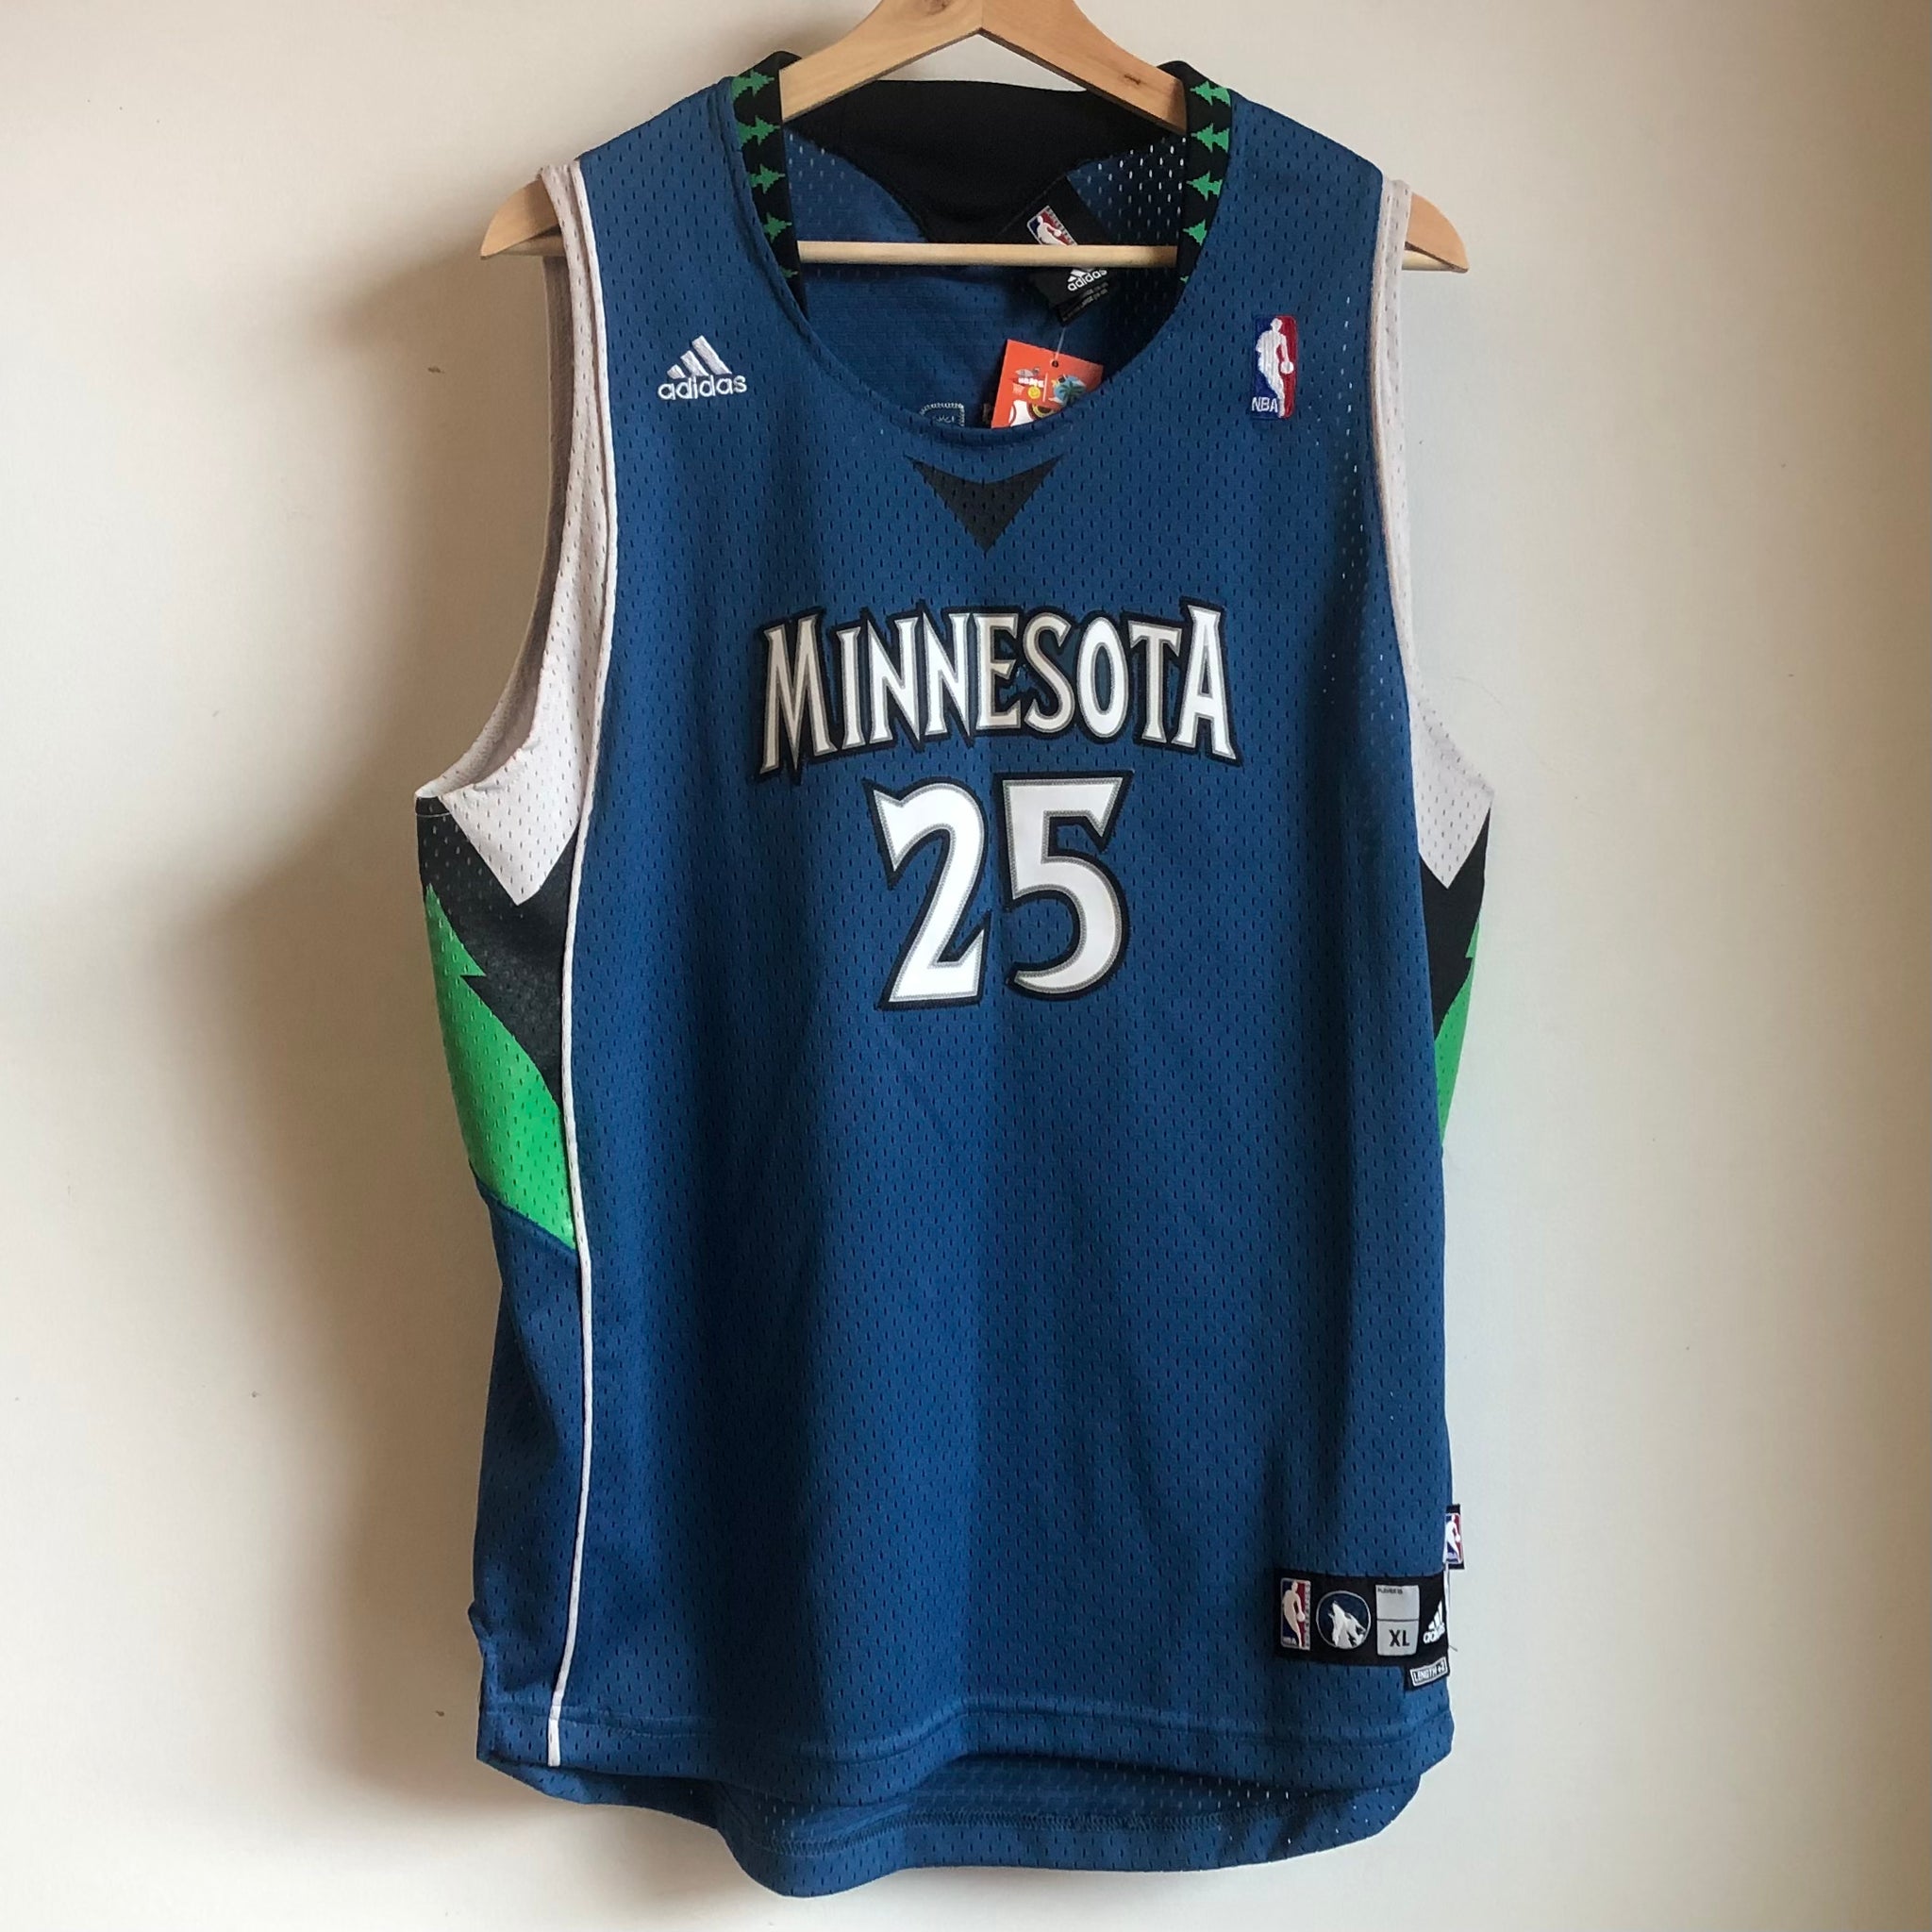 Minnesota Timberwolves Home Uniform